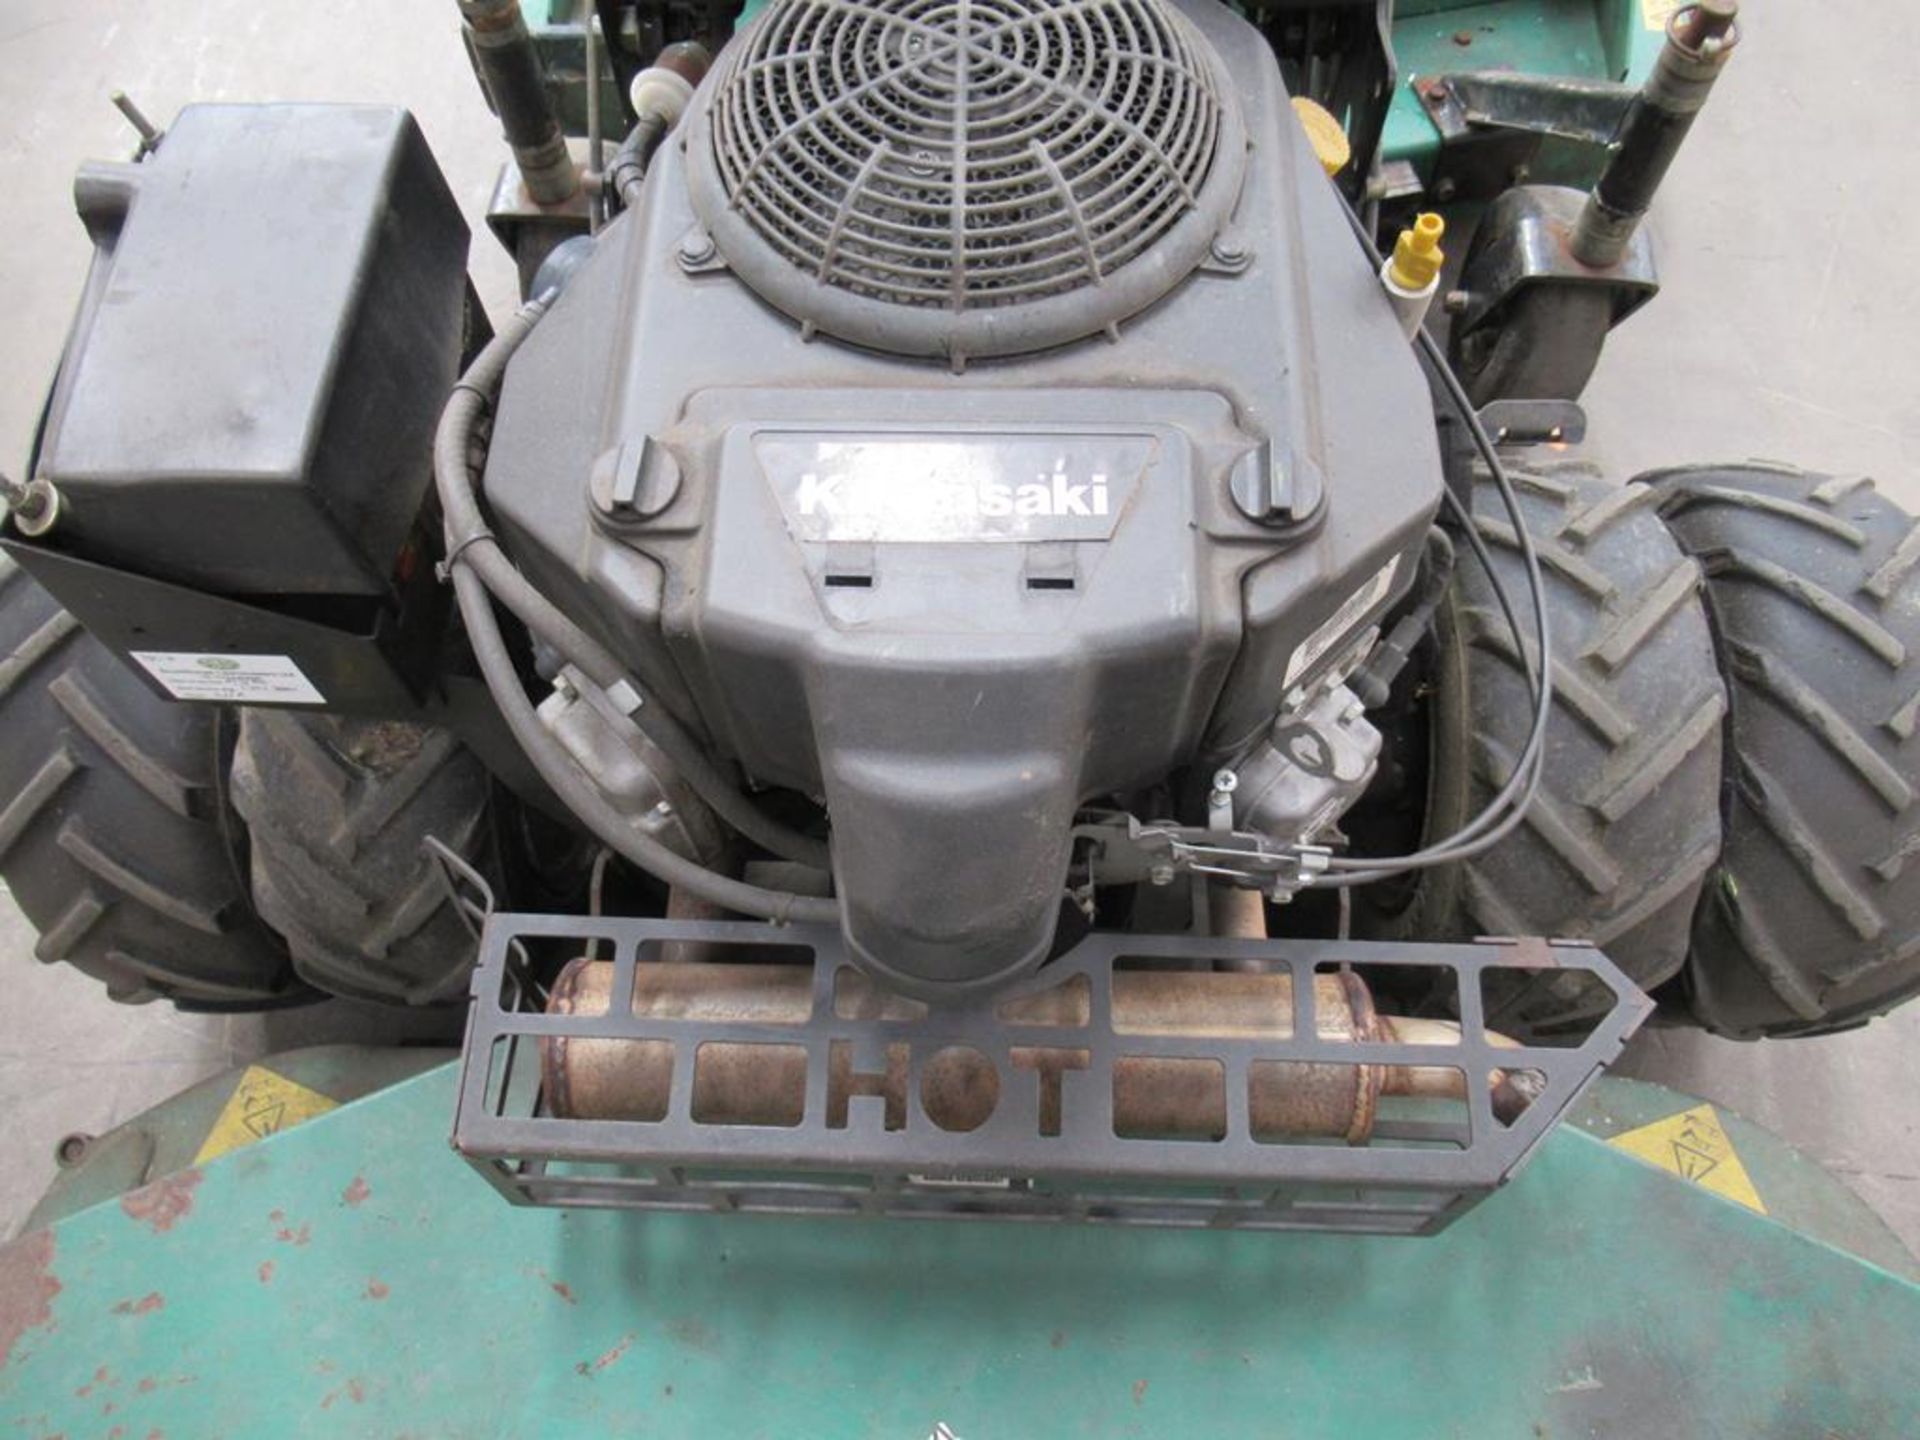 Bobcat 48" petrol lawnmower - Image 4 of 10